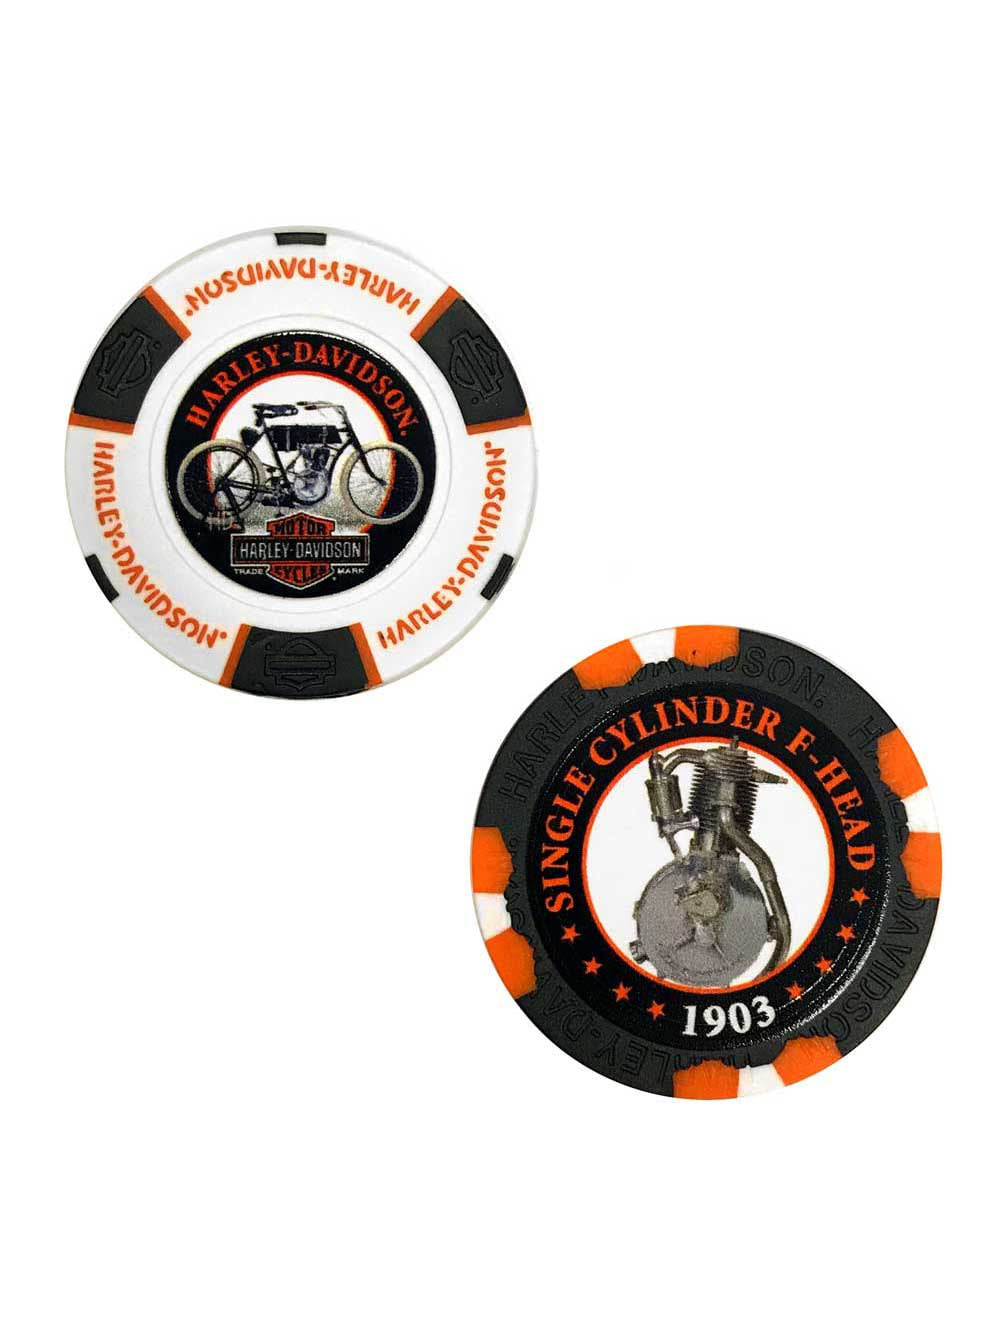 Gray & Orange Iowa Hawkeye 115th Anniversary Harley Poker Chip Coralville